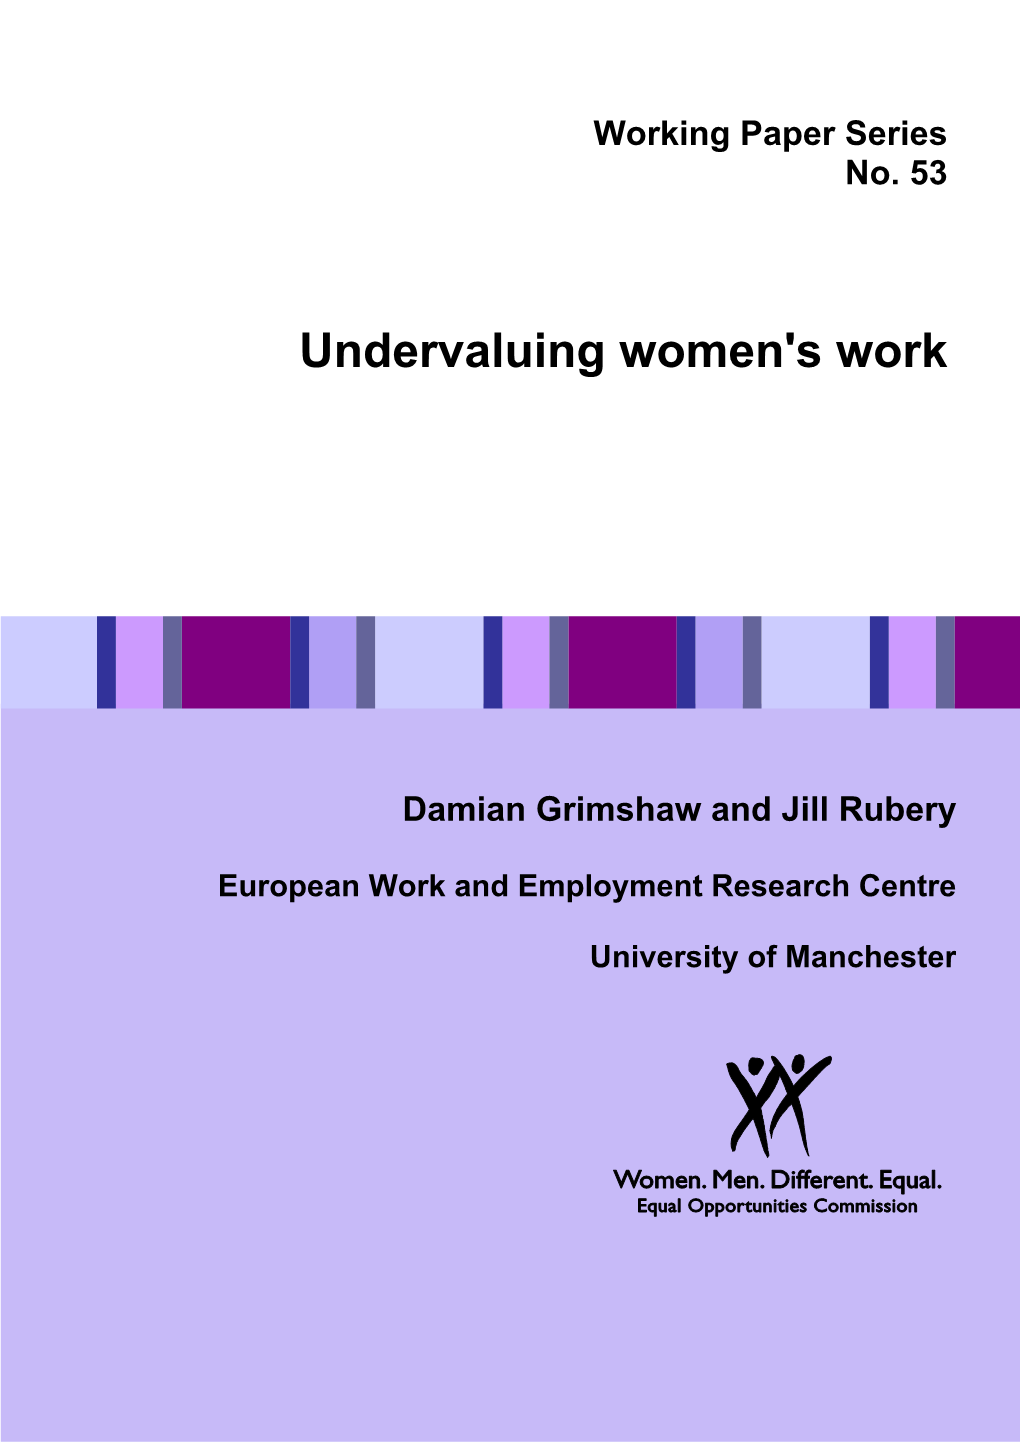 WP53 Undervaluing Women's Work